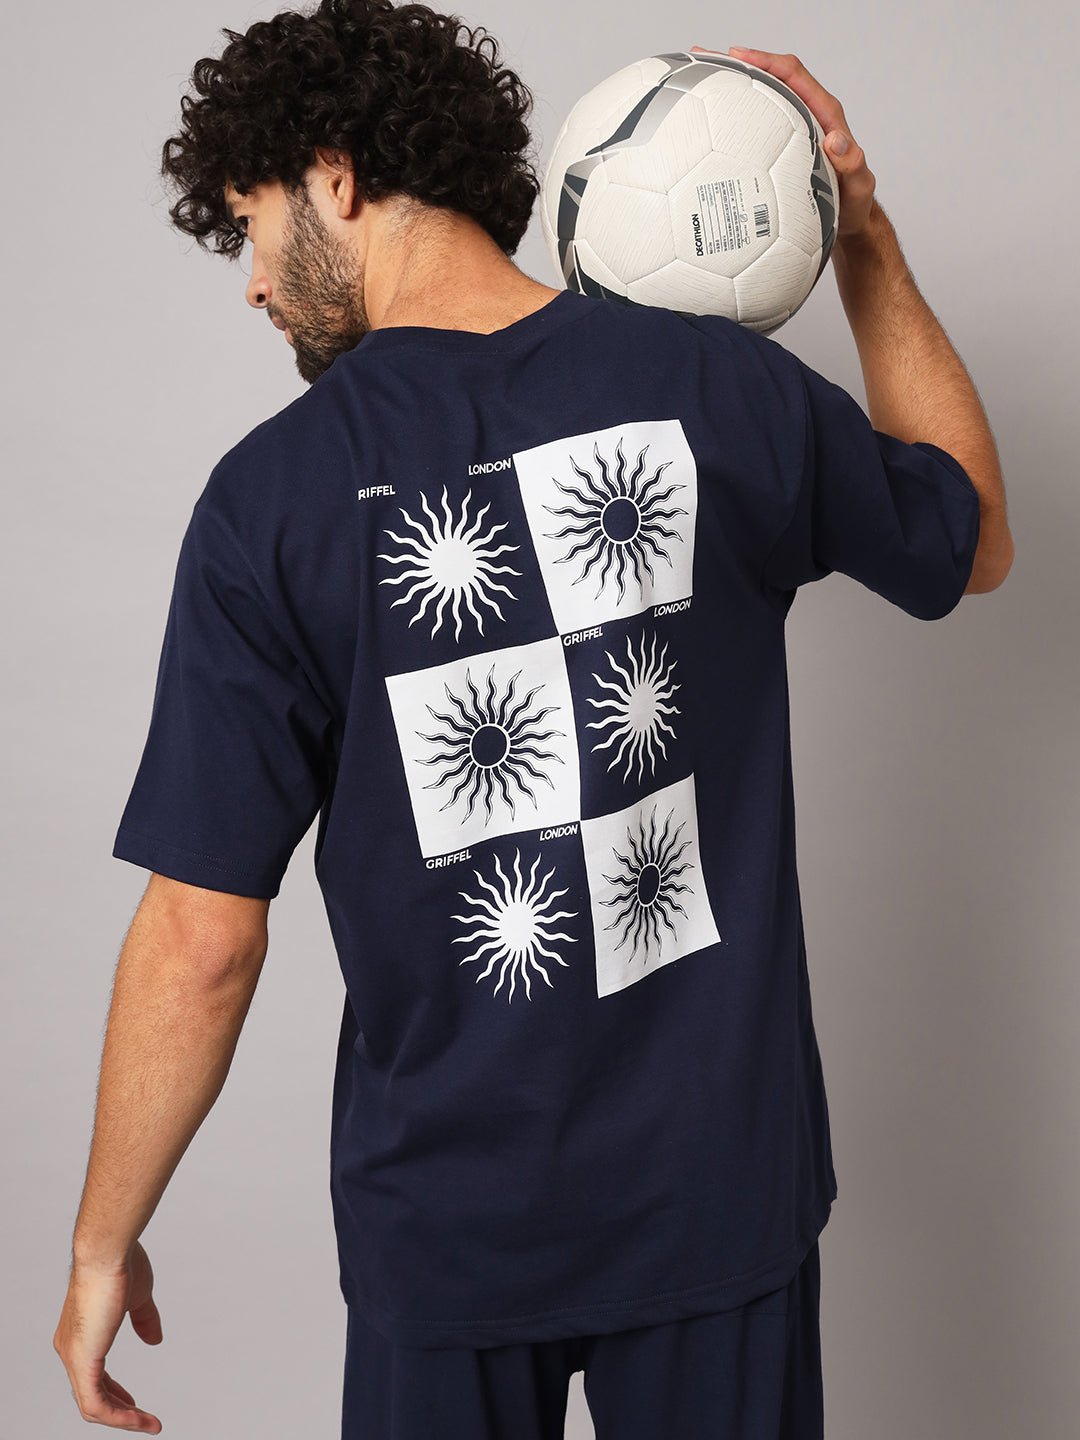 GRIFFEL Men Navy 6 SUN oversized T-shirt - griffel